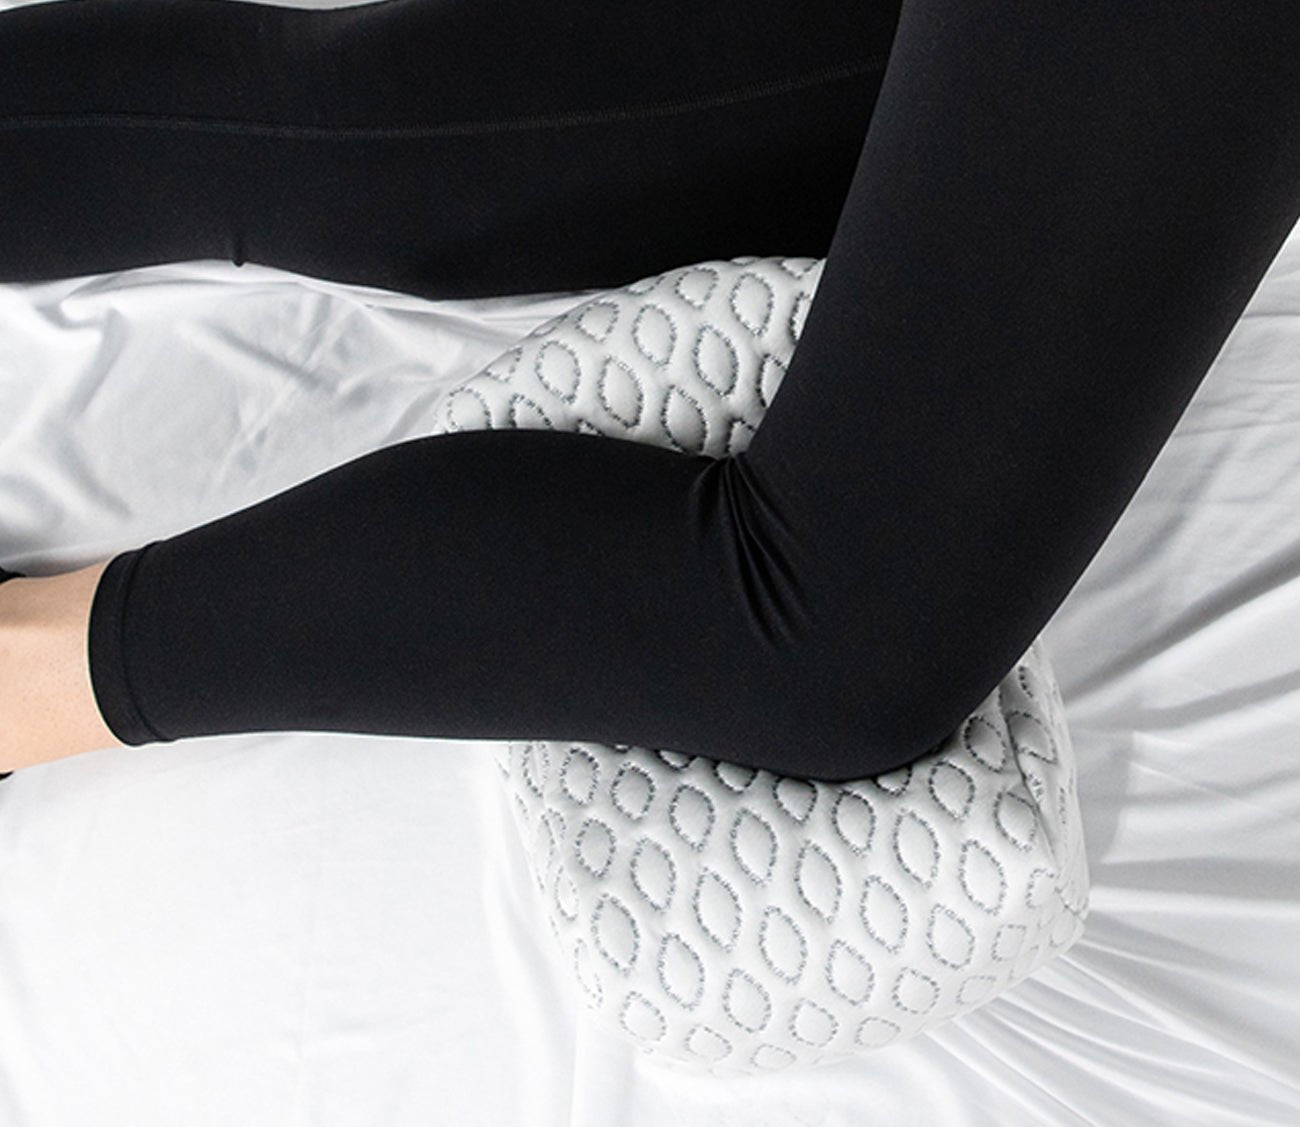 Bedgear Knee Support Pillow - Memory Foam